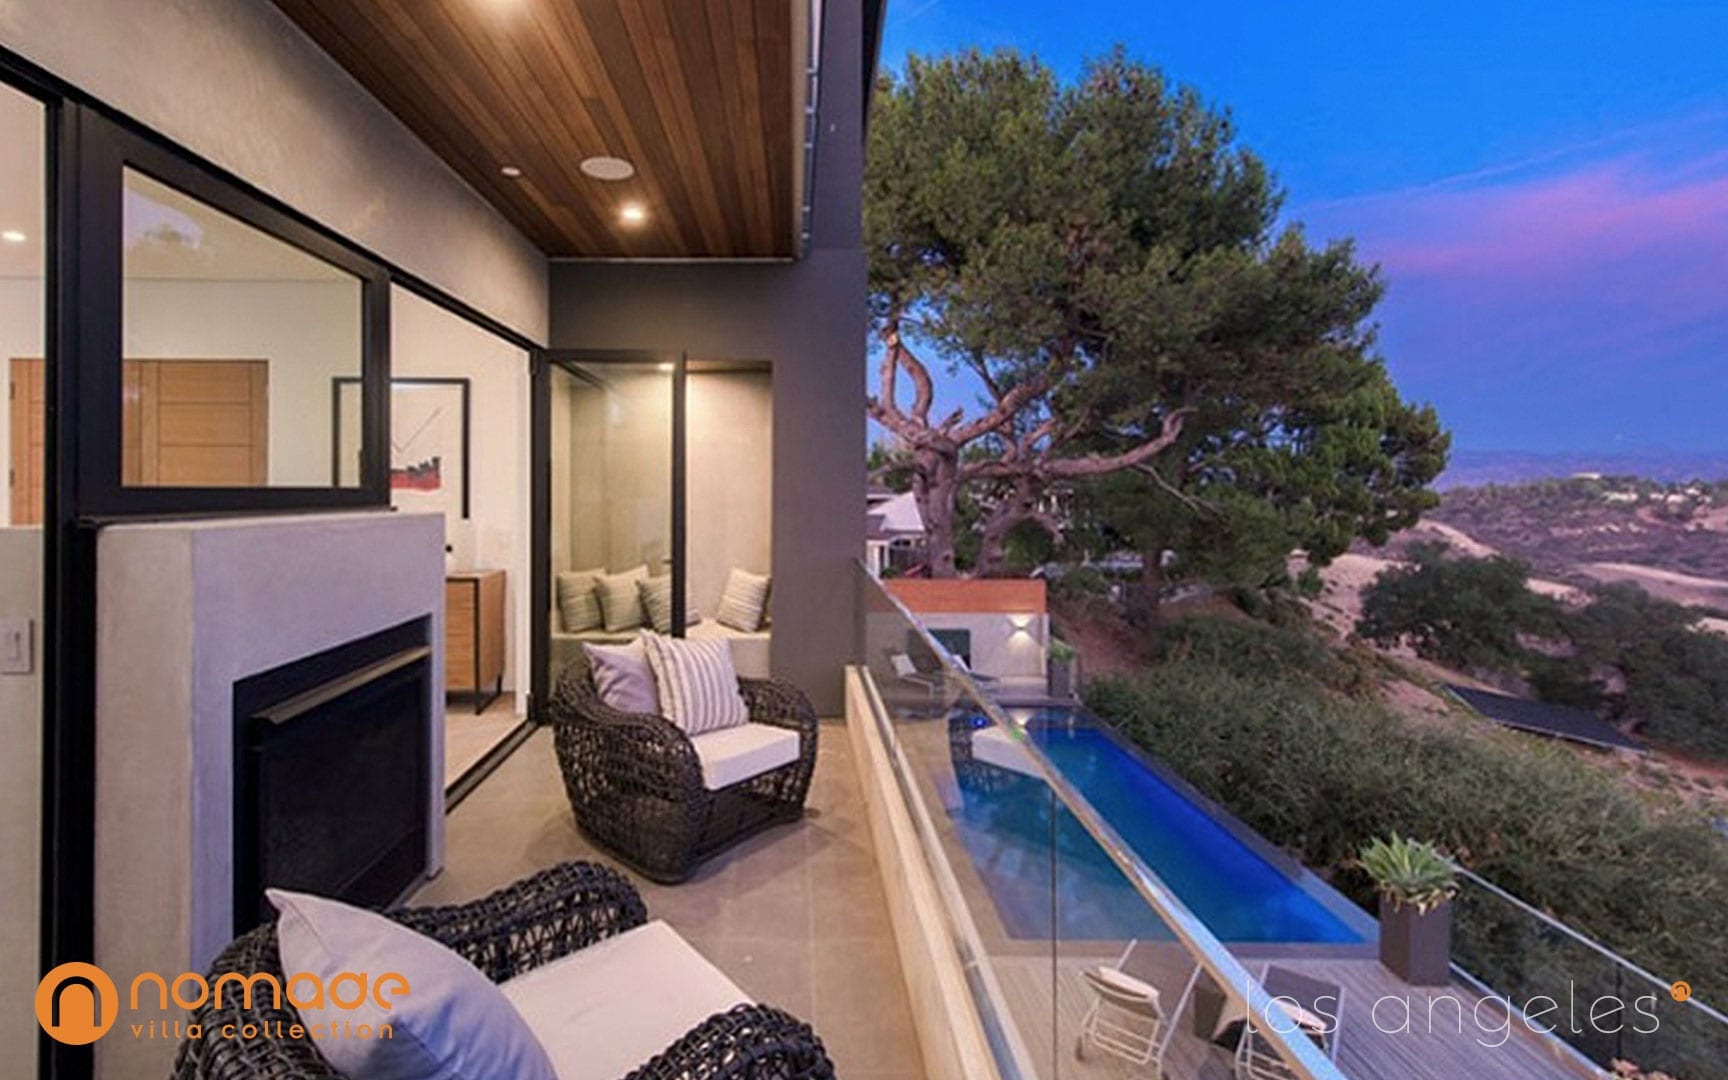 Casa Roscomare Modern Mansion Rental in Los Angeles | Nomade Villa Collection